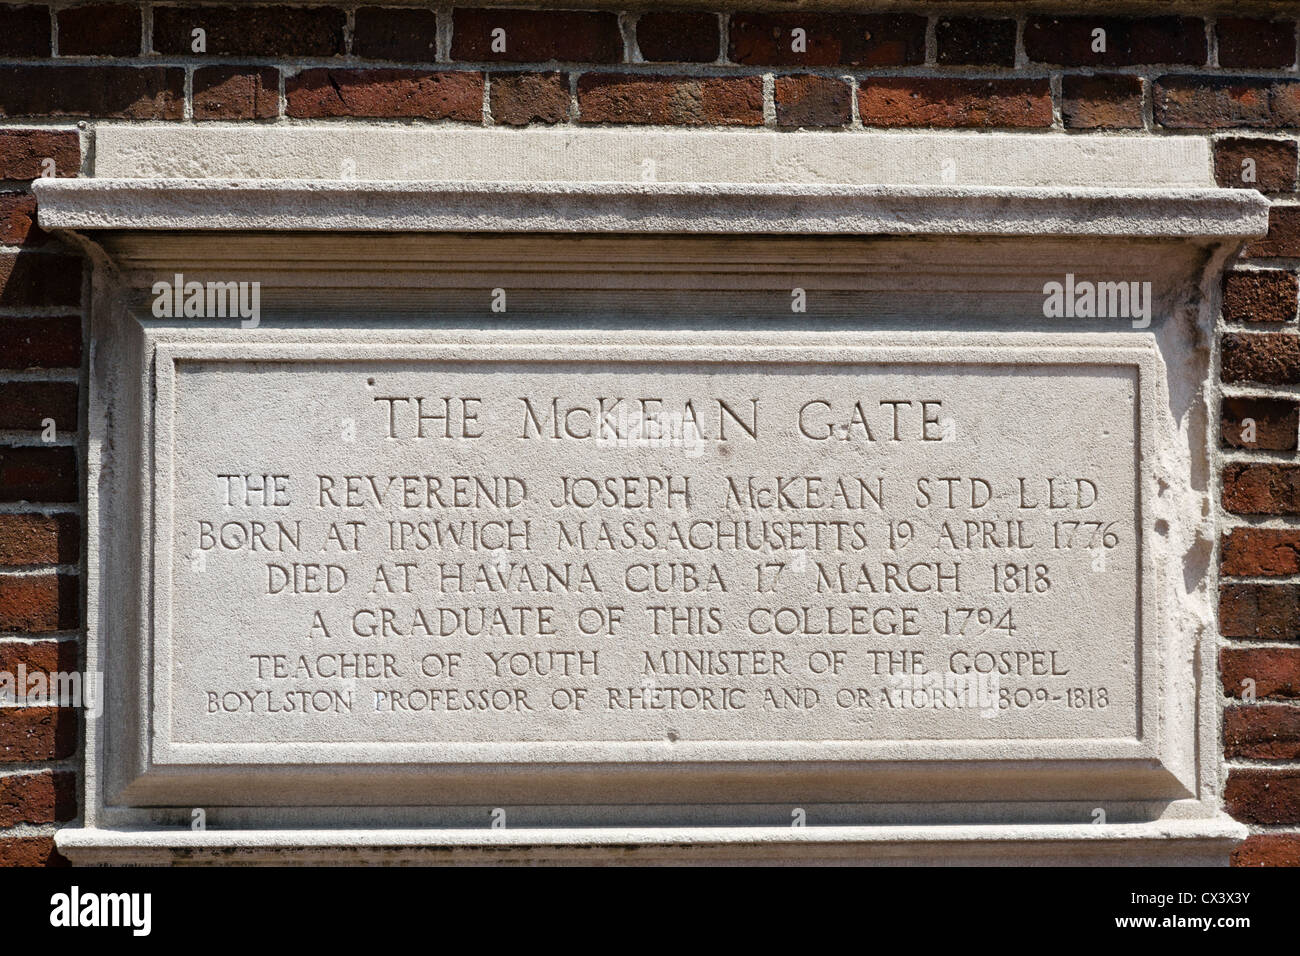 Plaque outside McKean Gate, Harvard University, Massachusetts Avenue, Cambridge, Boston, Massachusetts, USA Stock Photo